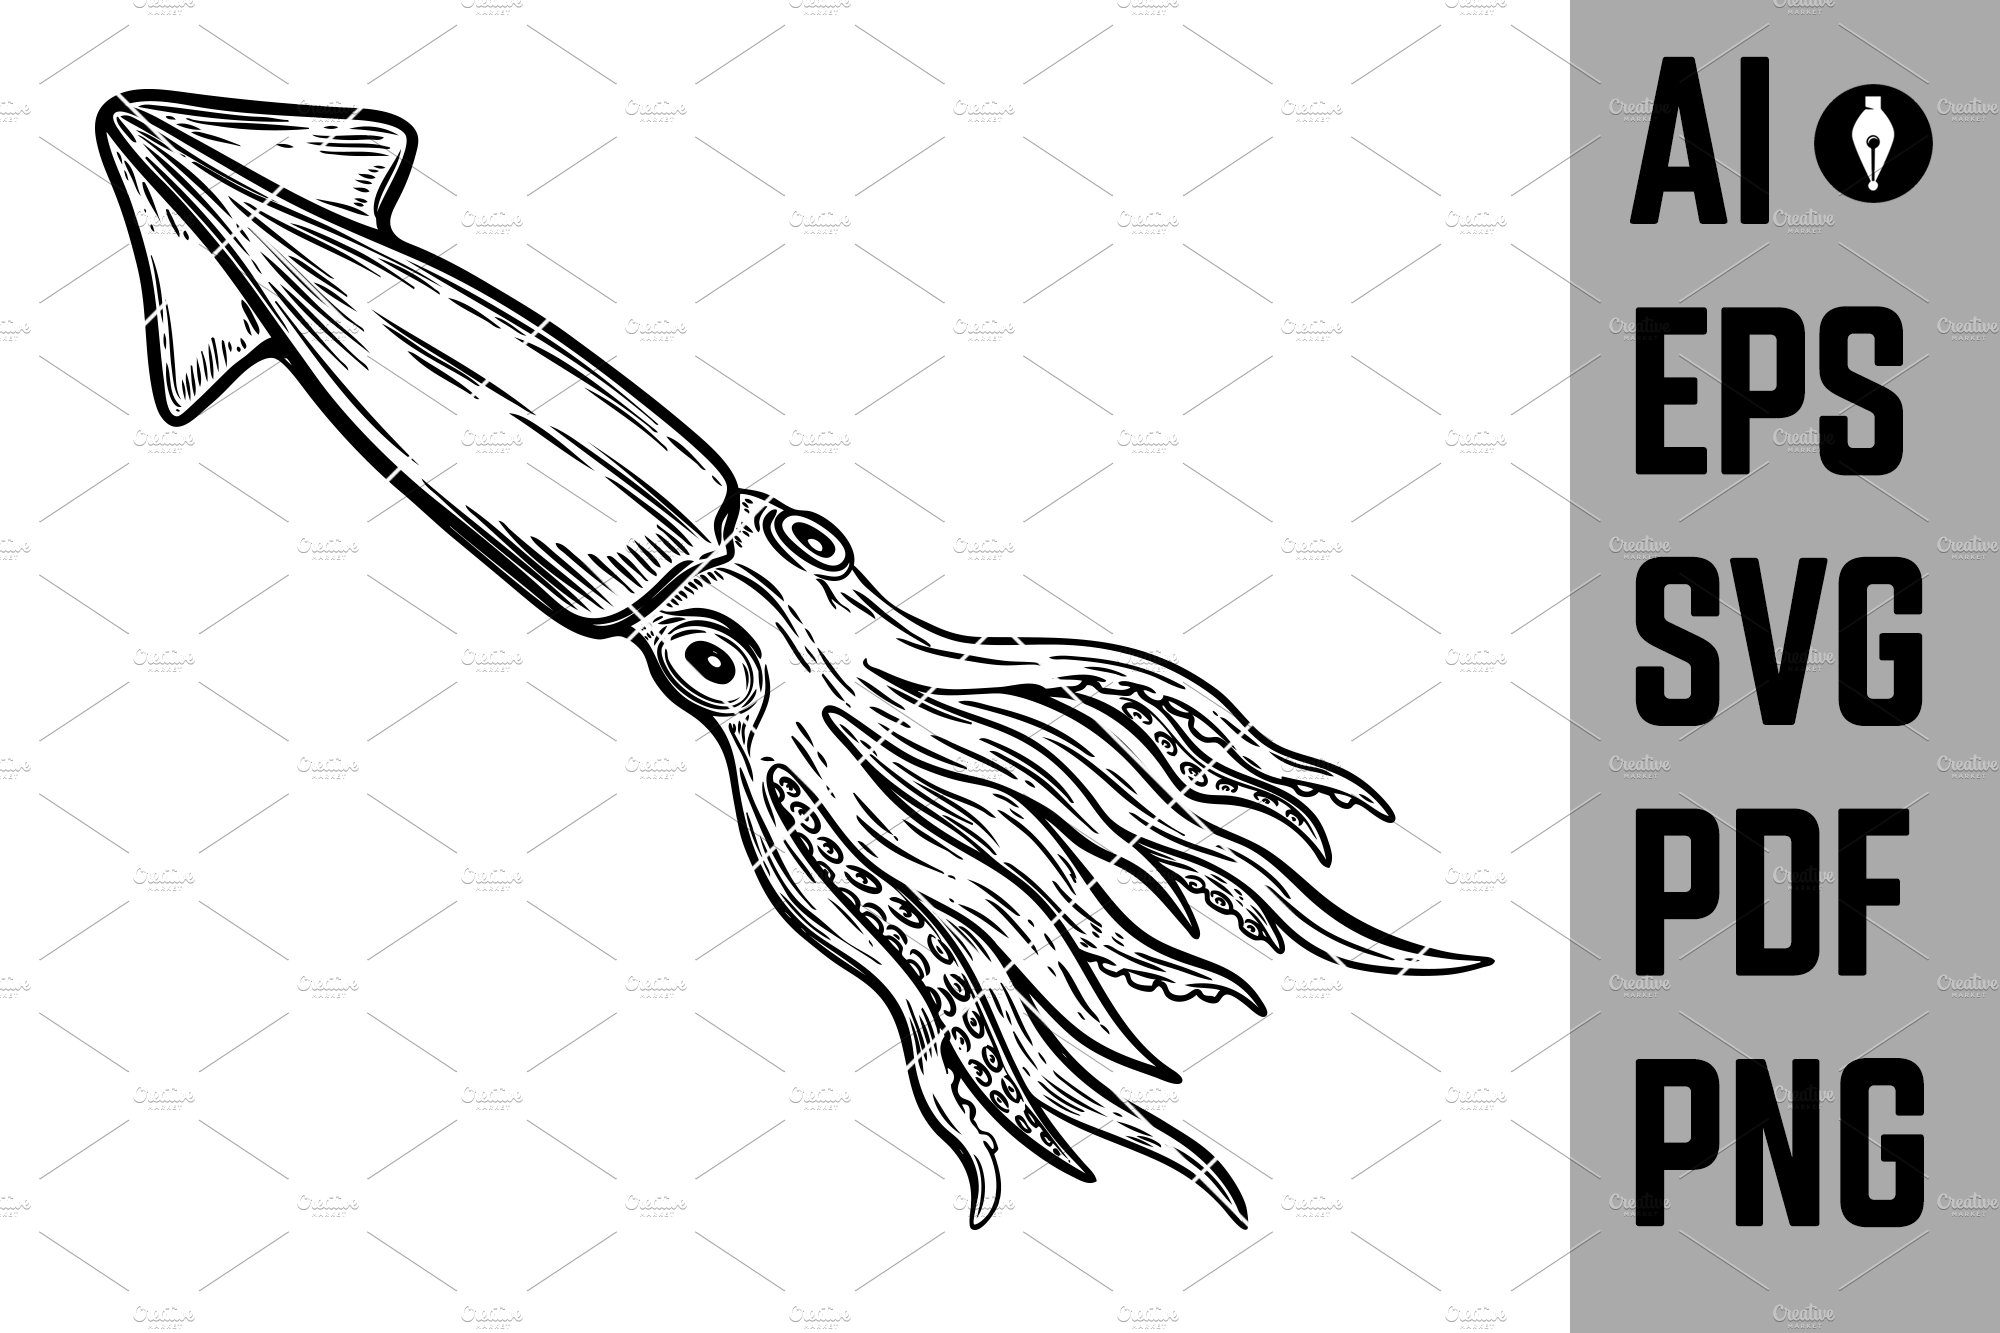 Squid illustration SVG cover image.